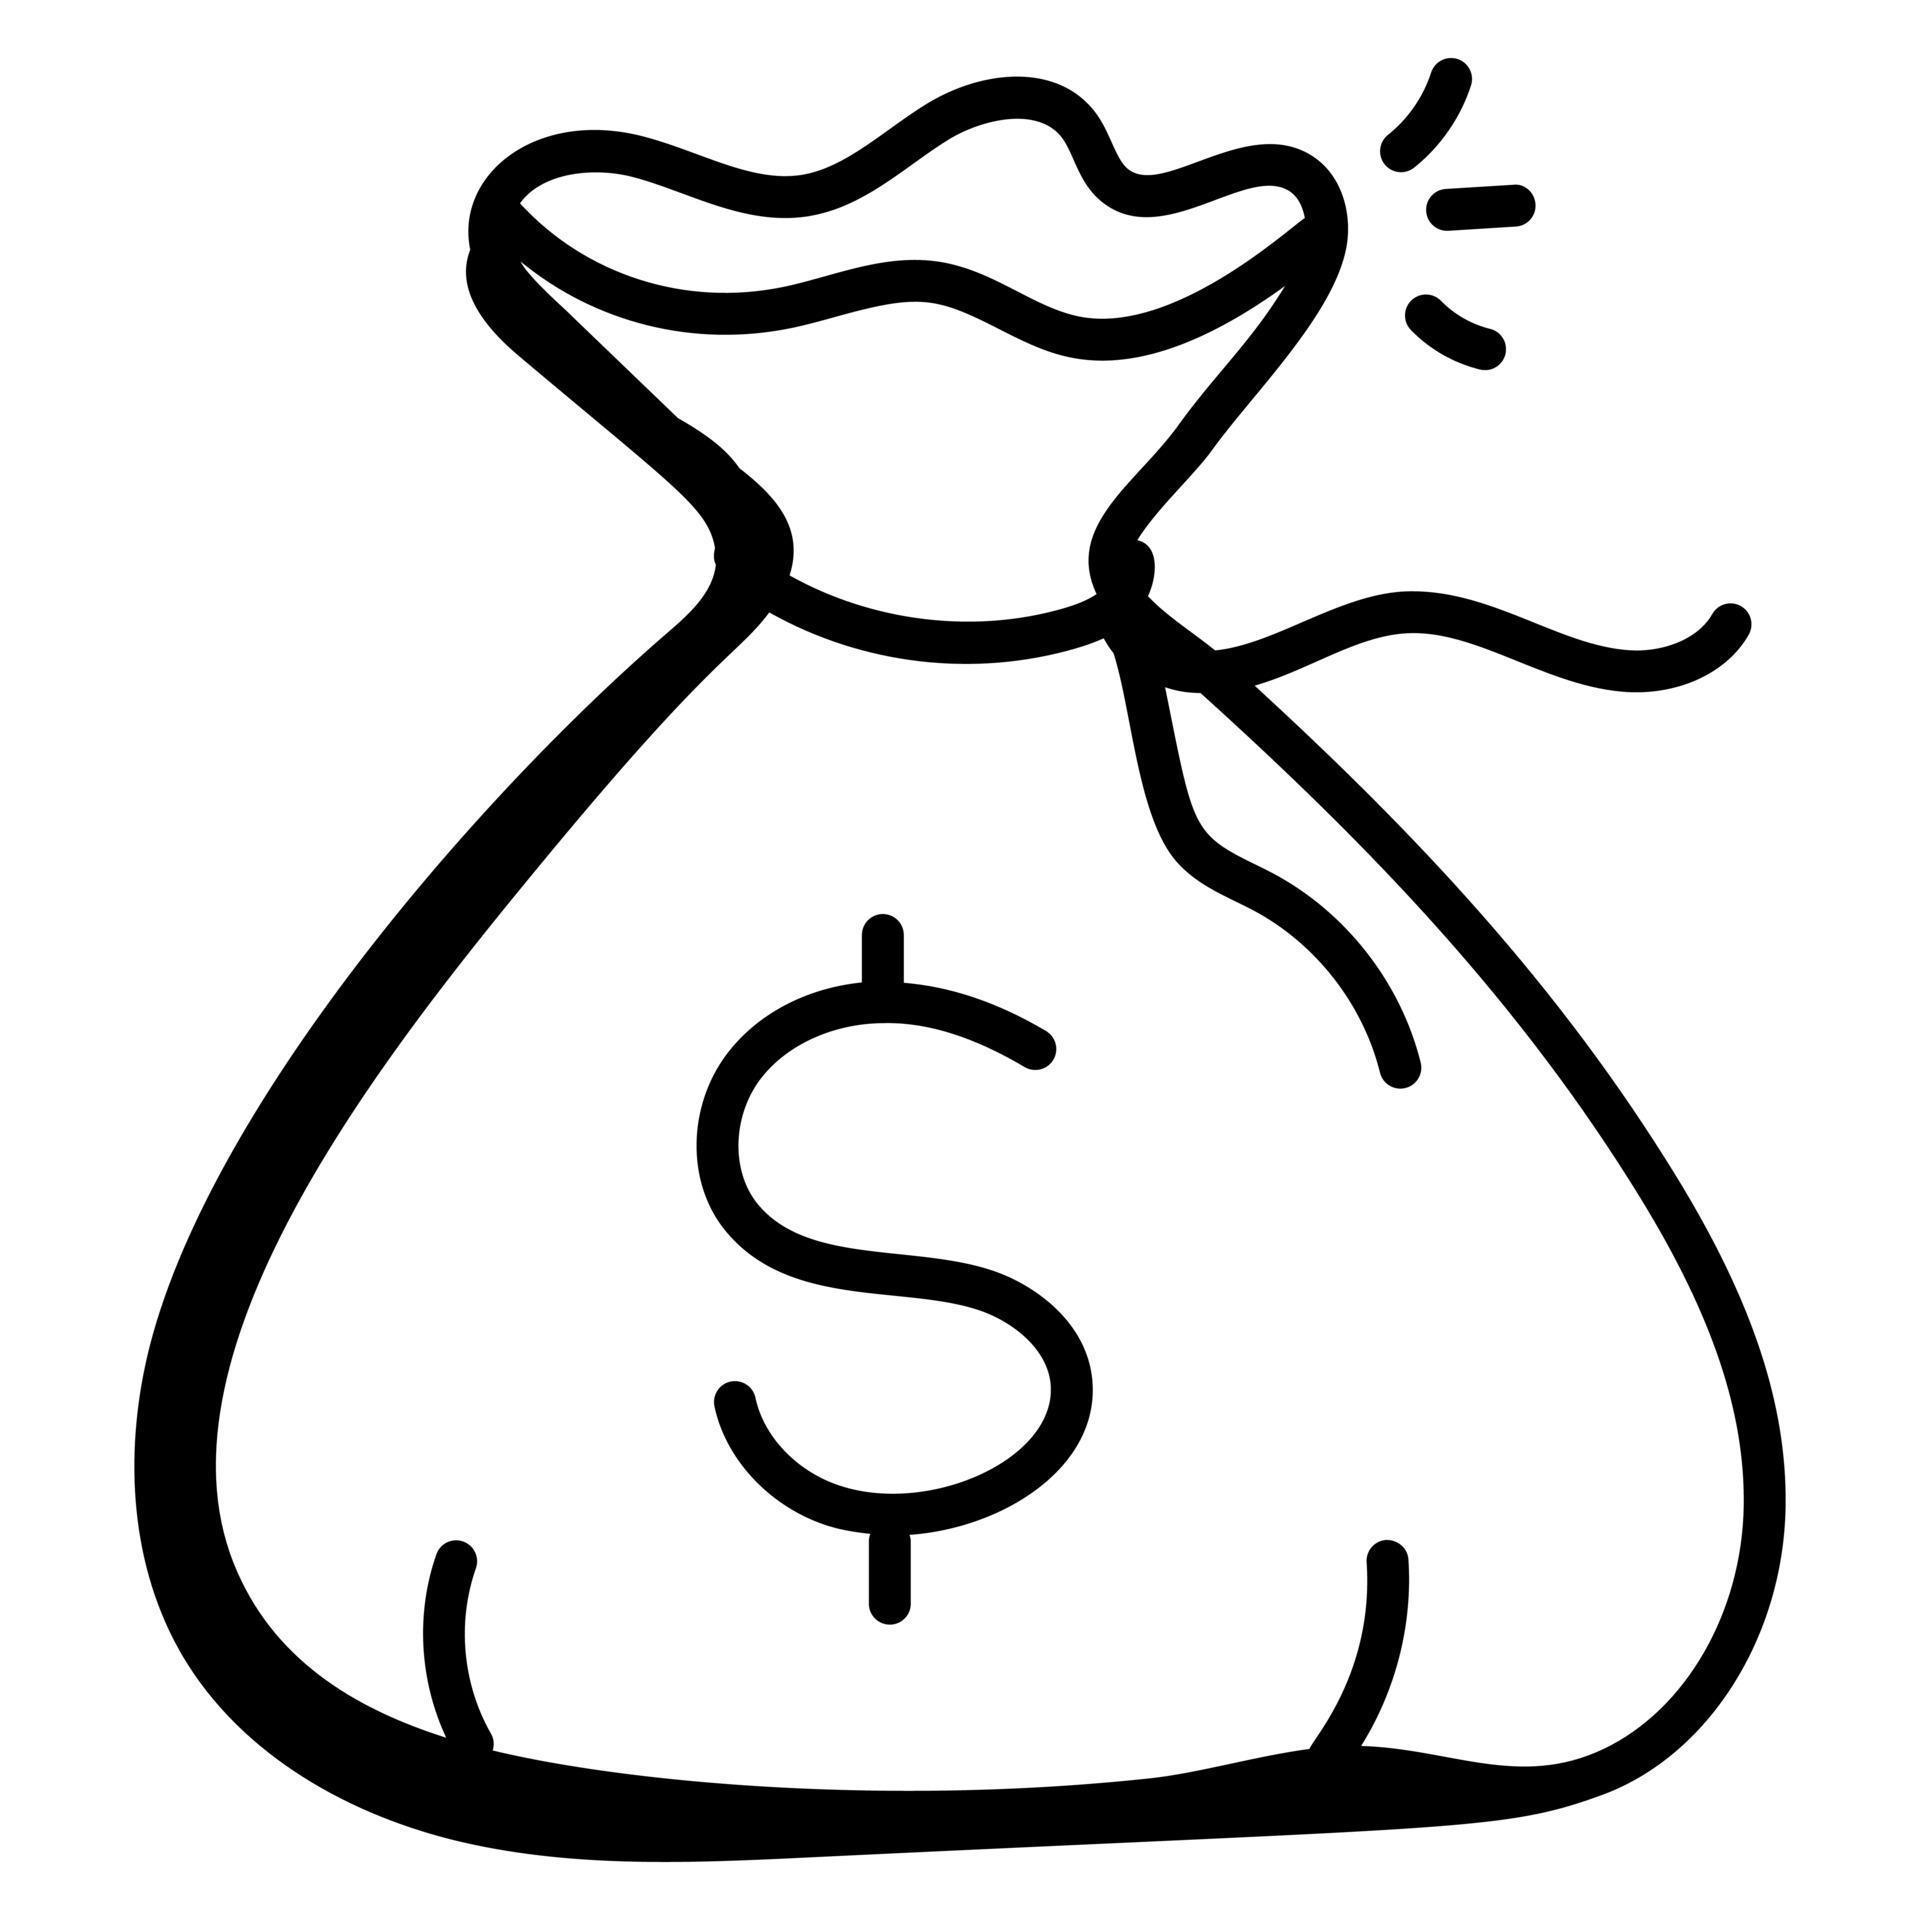 An icon of money pouch doodle design 7697395 Vector Art at Vecteezy